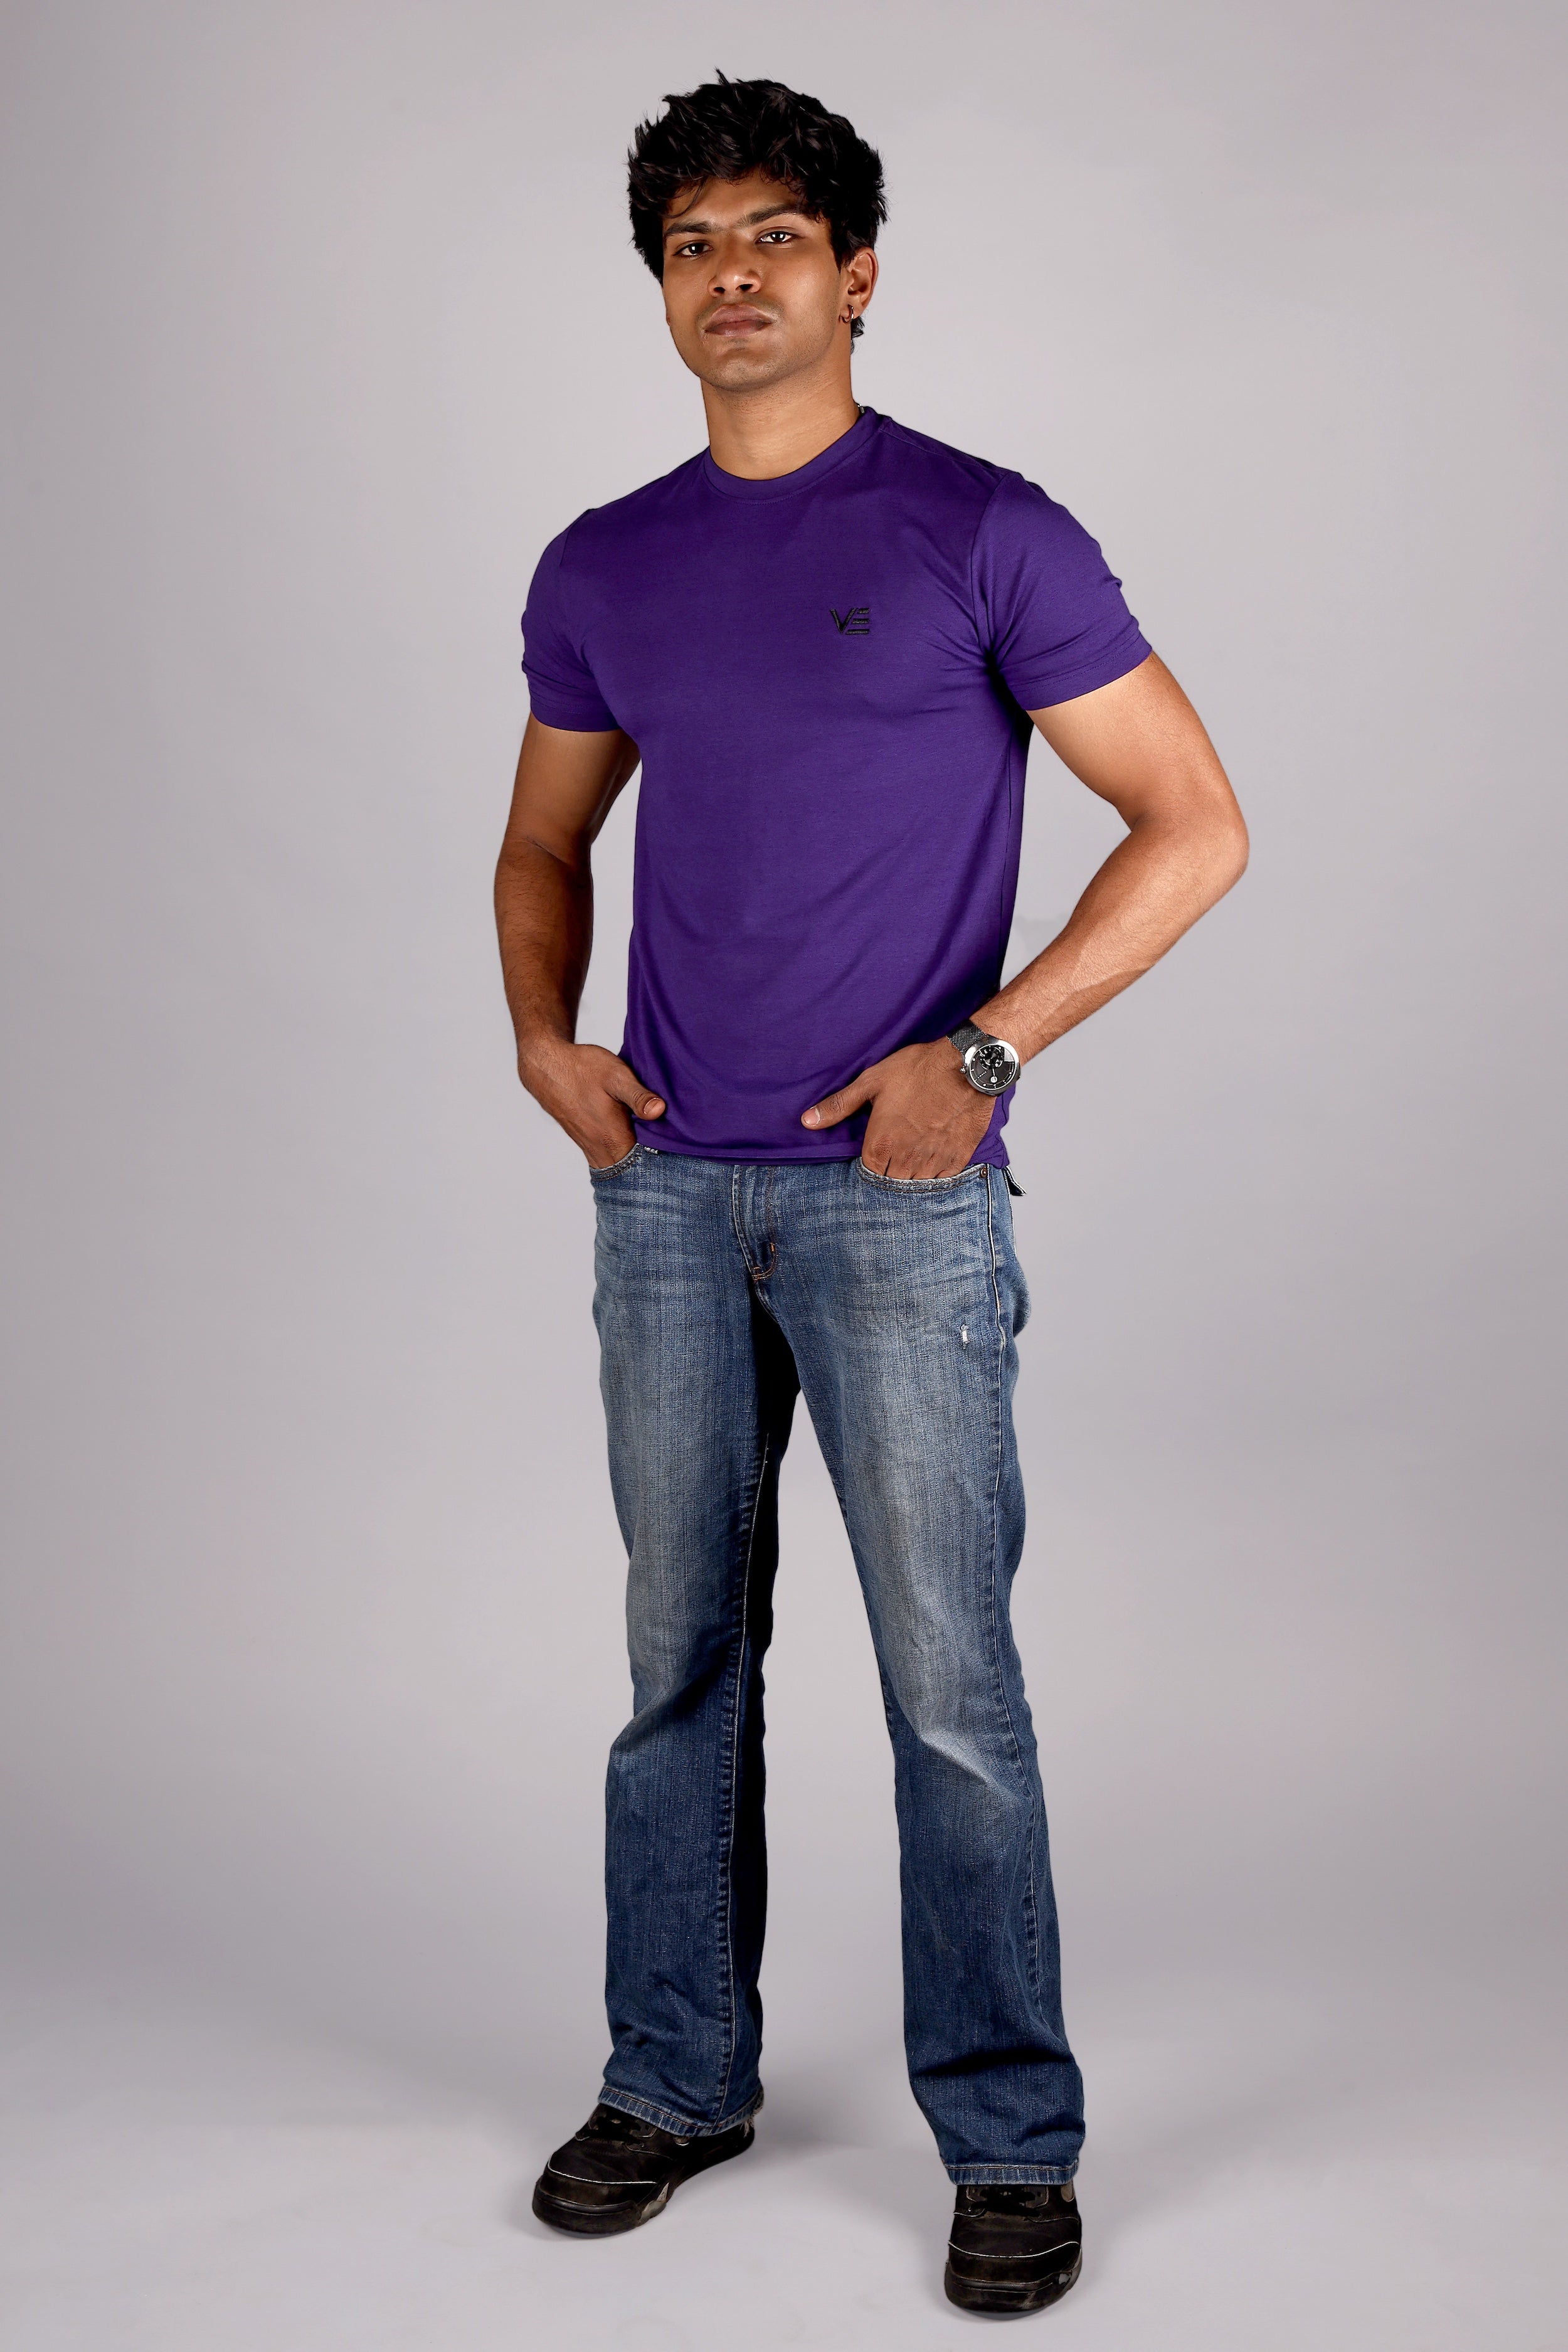 Vedco Men's Bamboo T-Shirt (Violet Indigo)